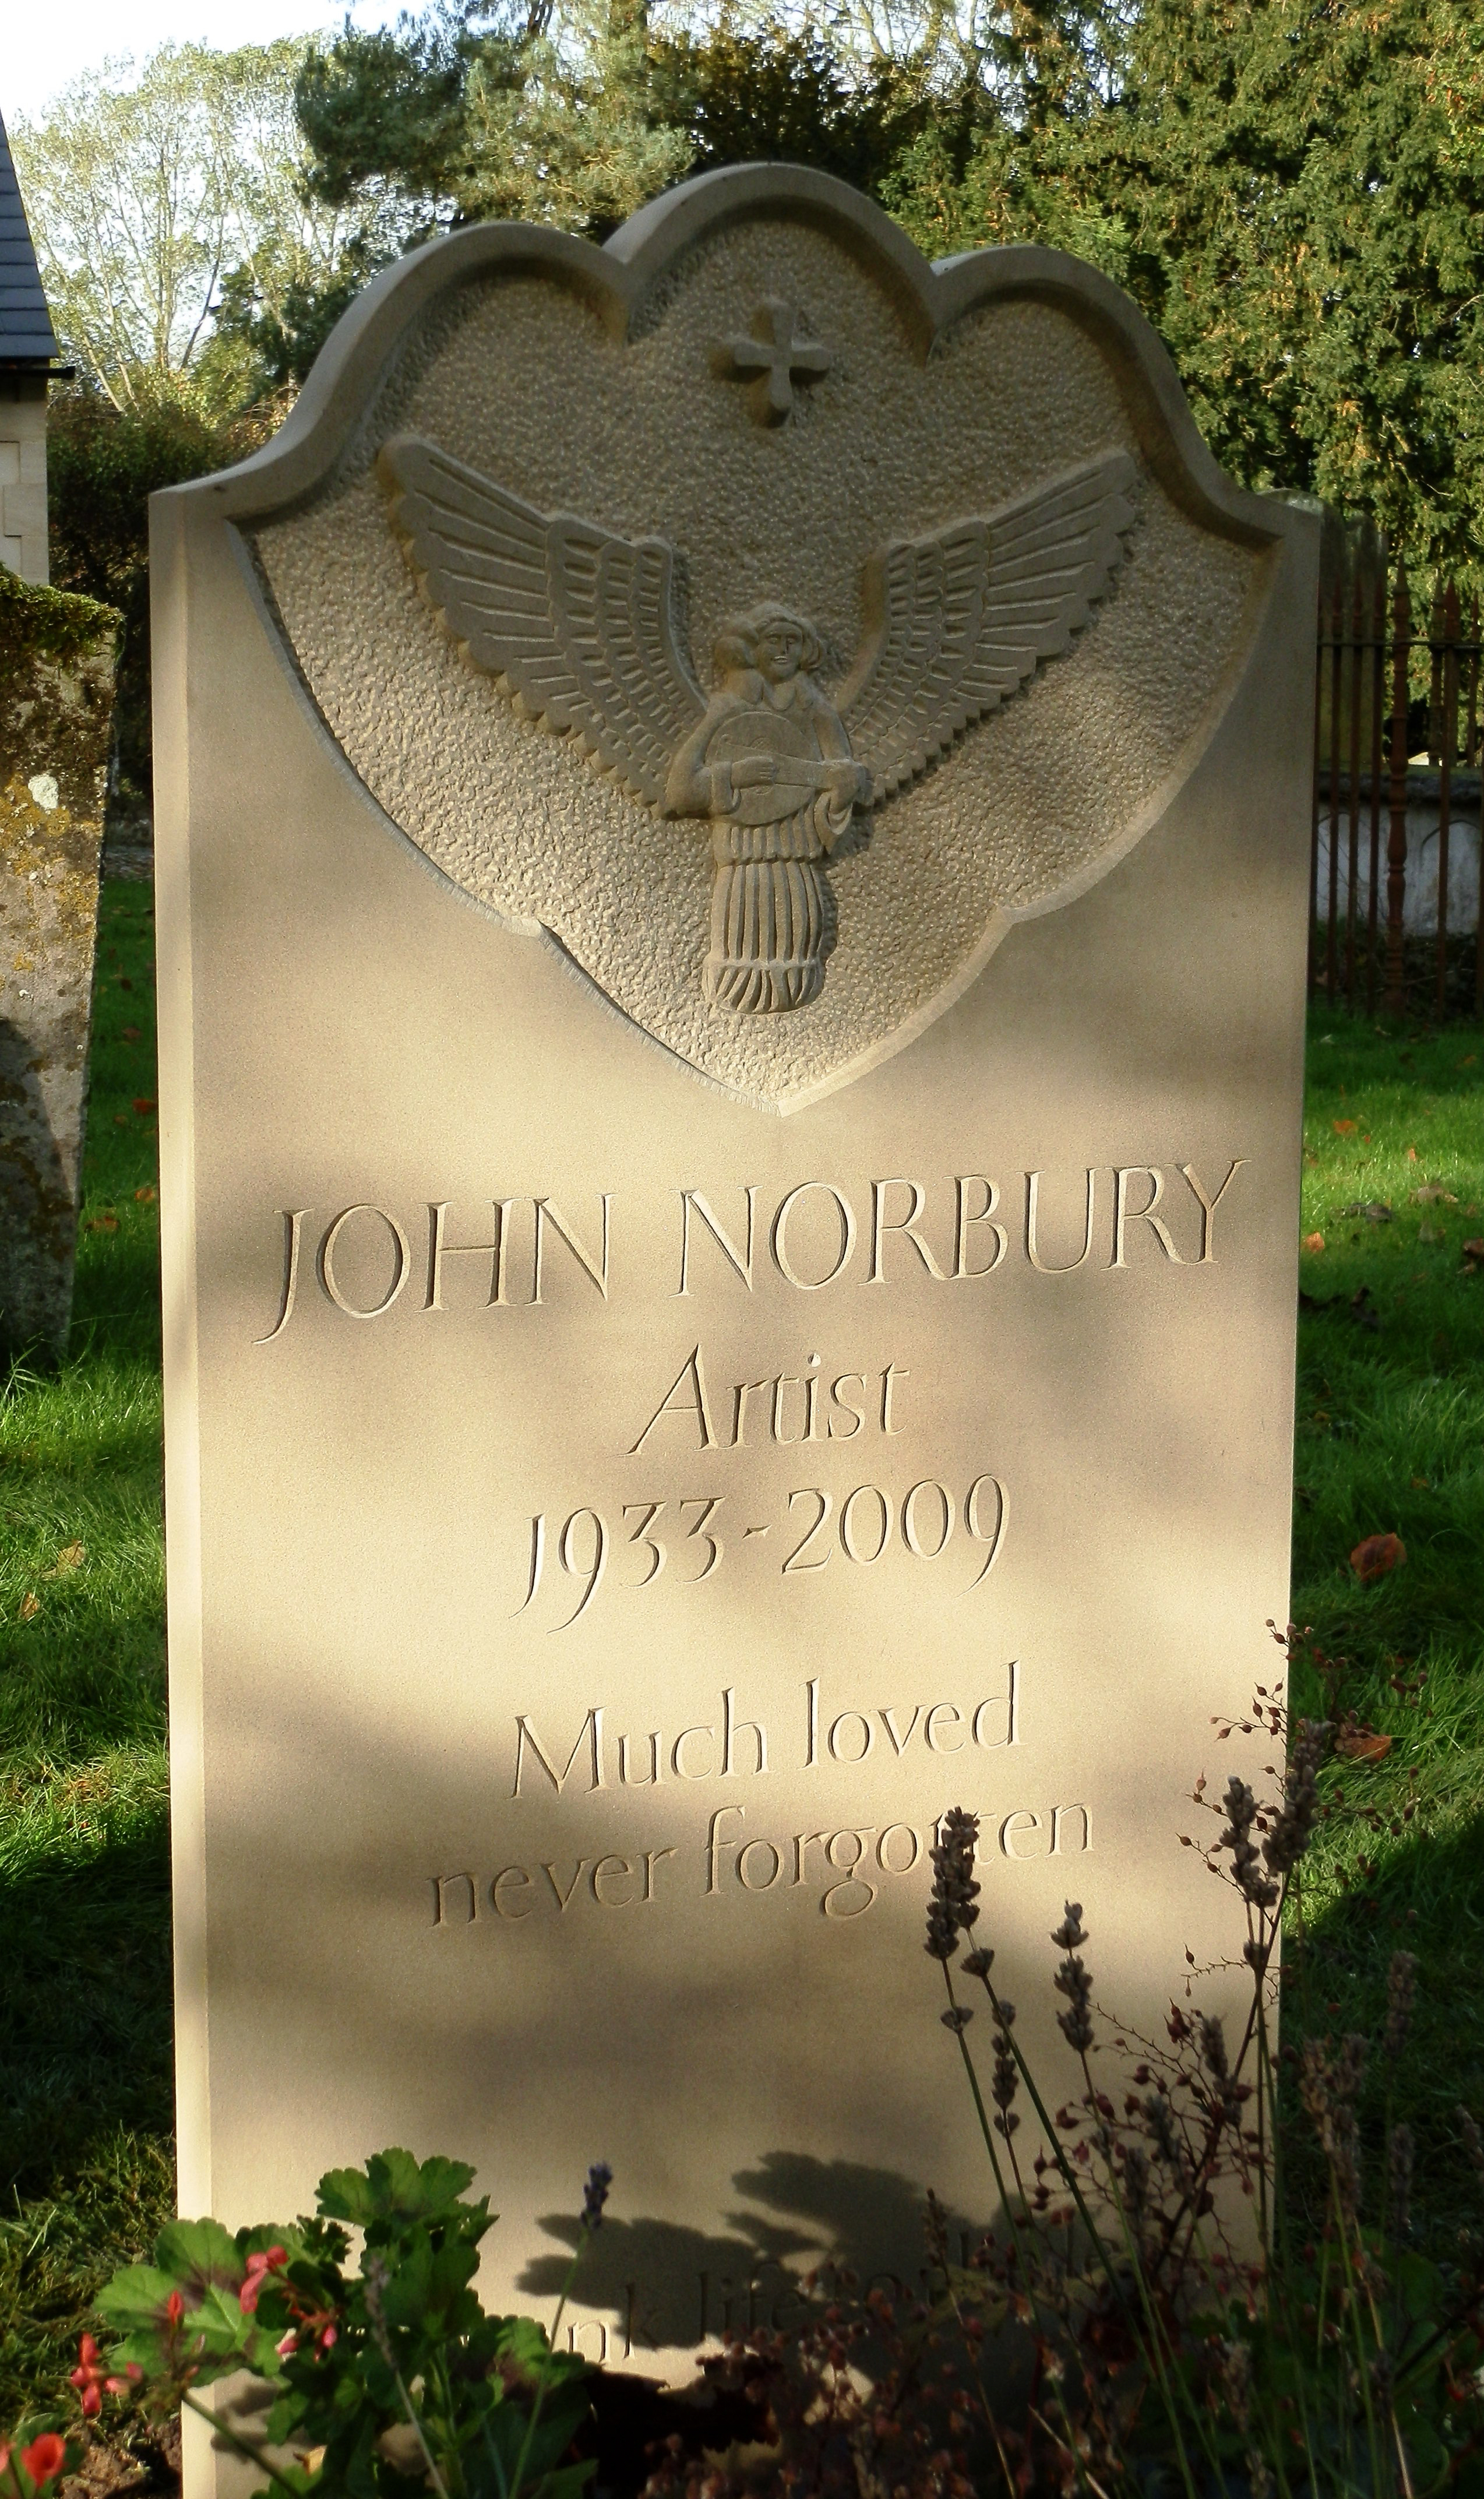 Headstone on Woodkirk York stone